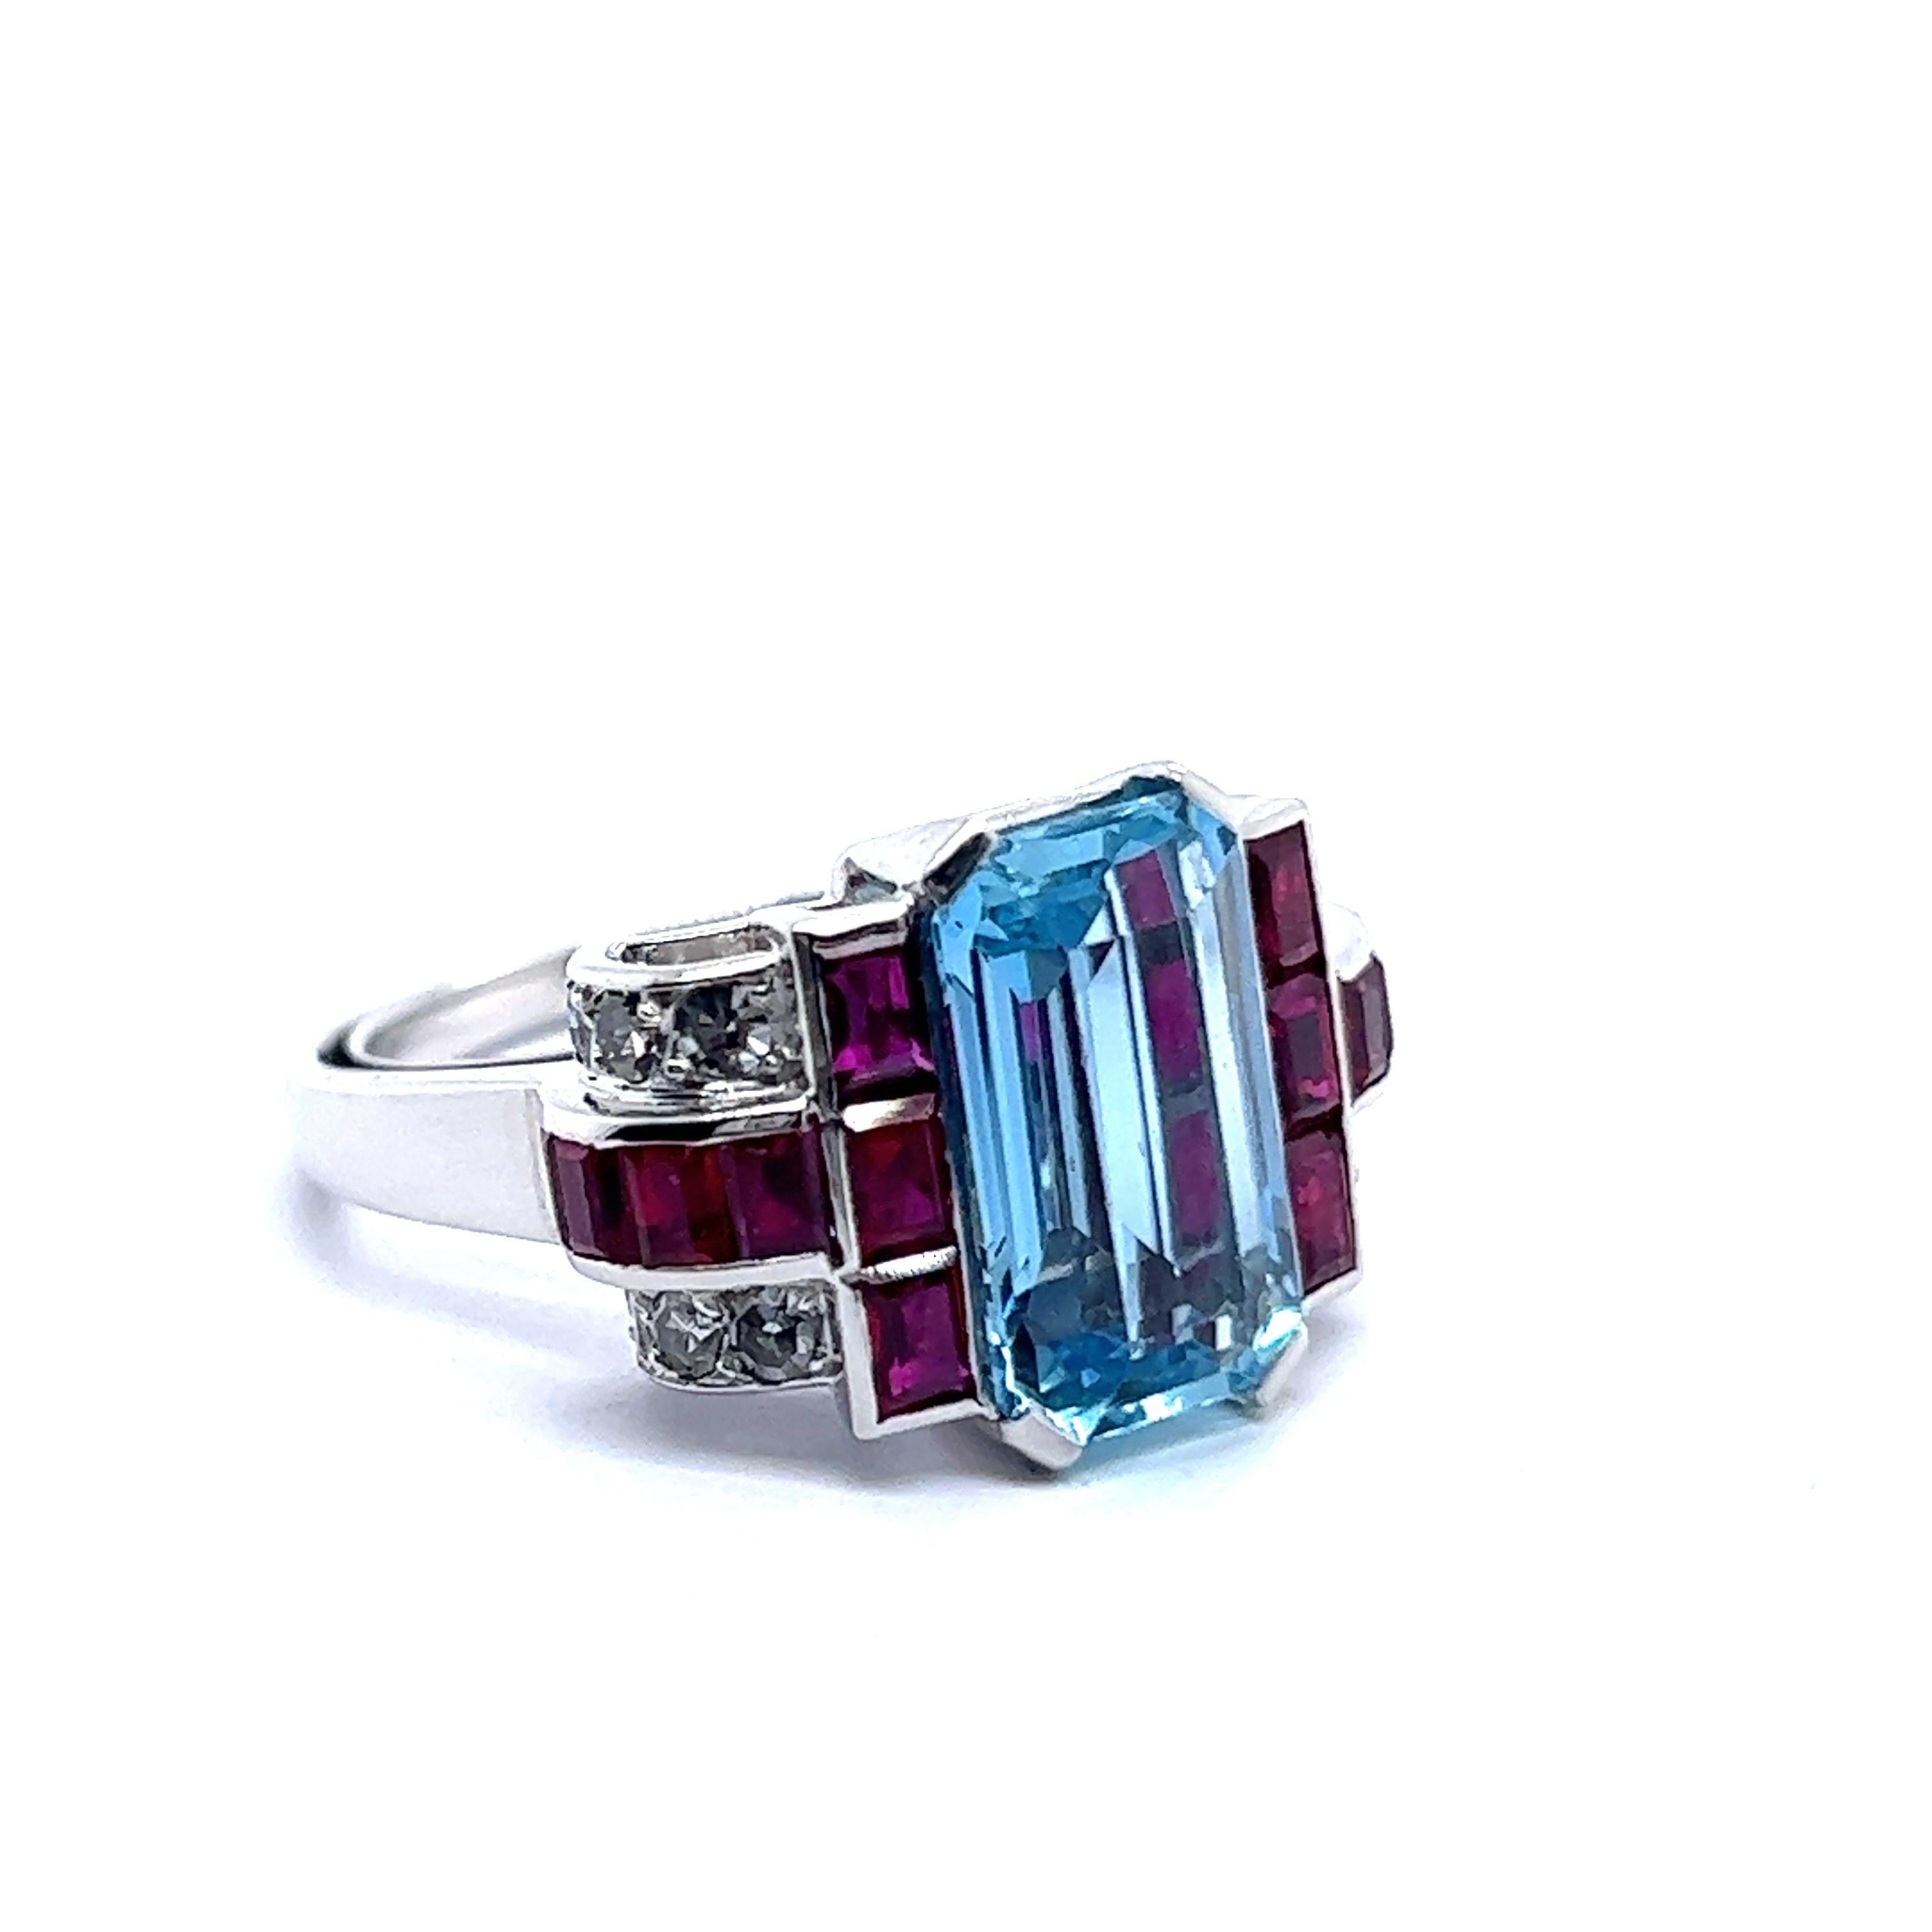 Emerald Cut Ring with Aquamarine, Rubies & Diamonds in 18 Karat White Gold by Gübelin